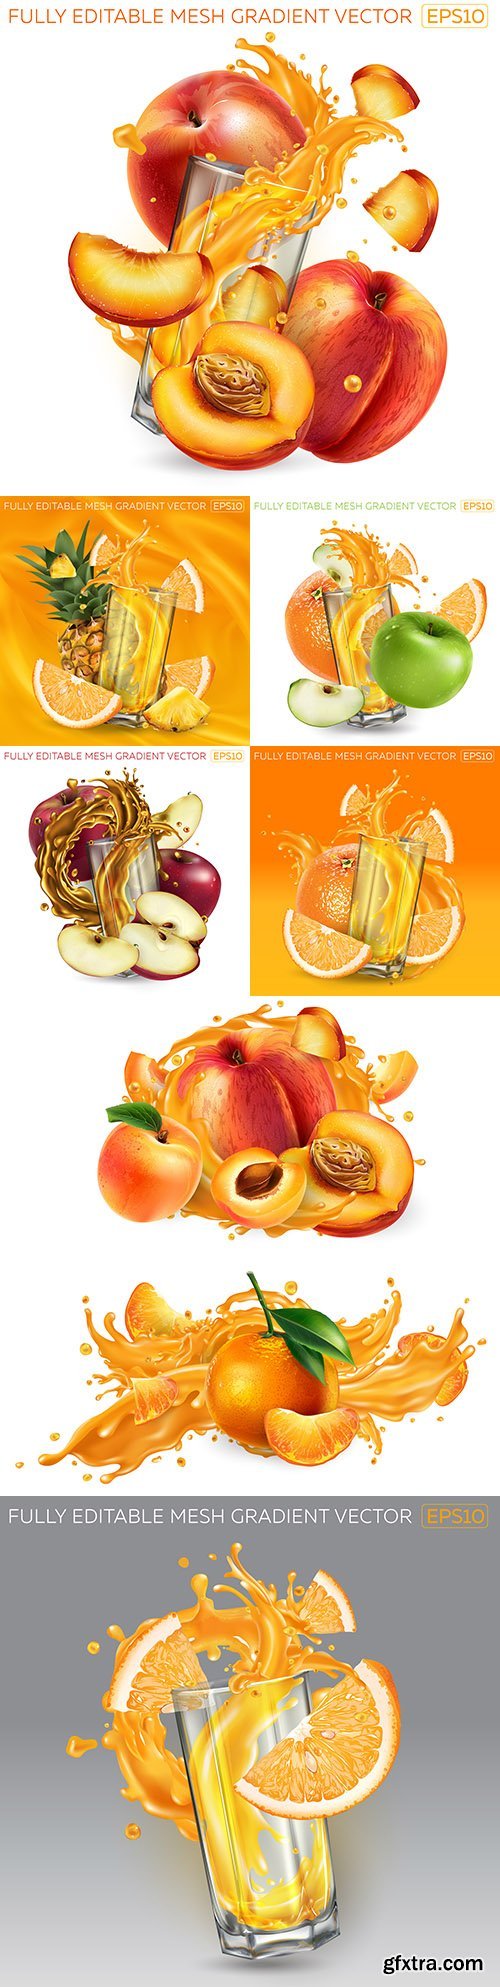 Whole fruit and bulls fruit juice realistic illustrations